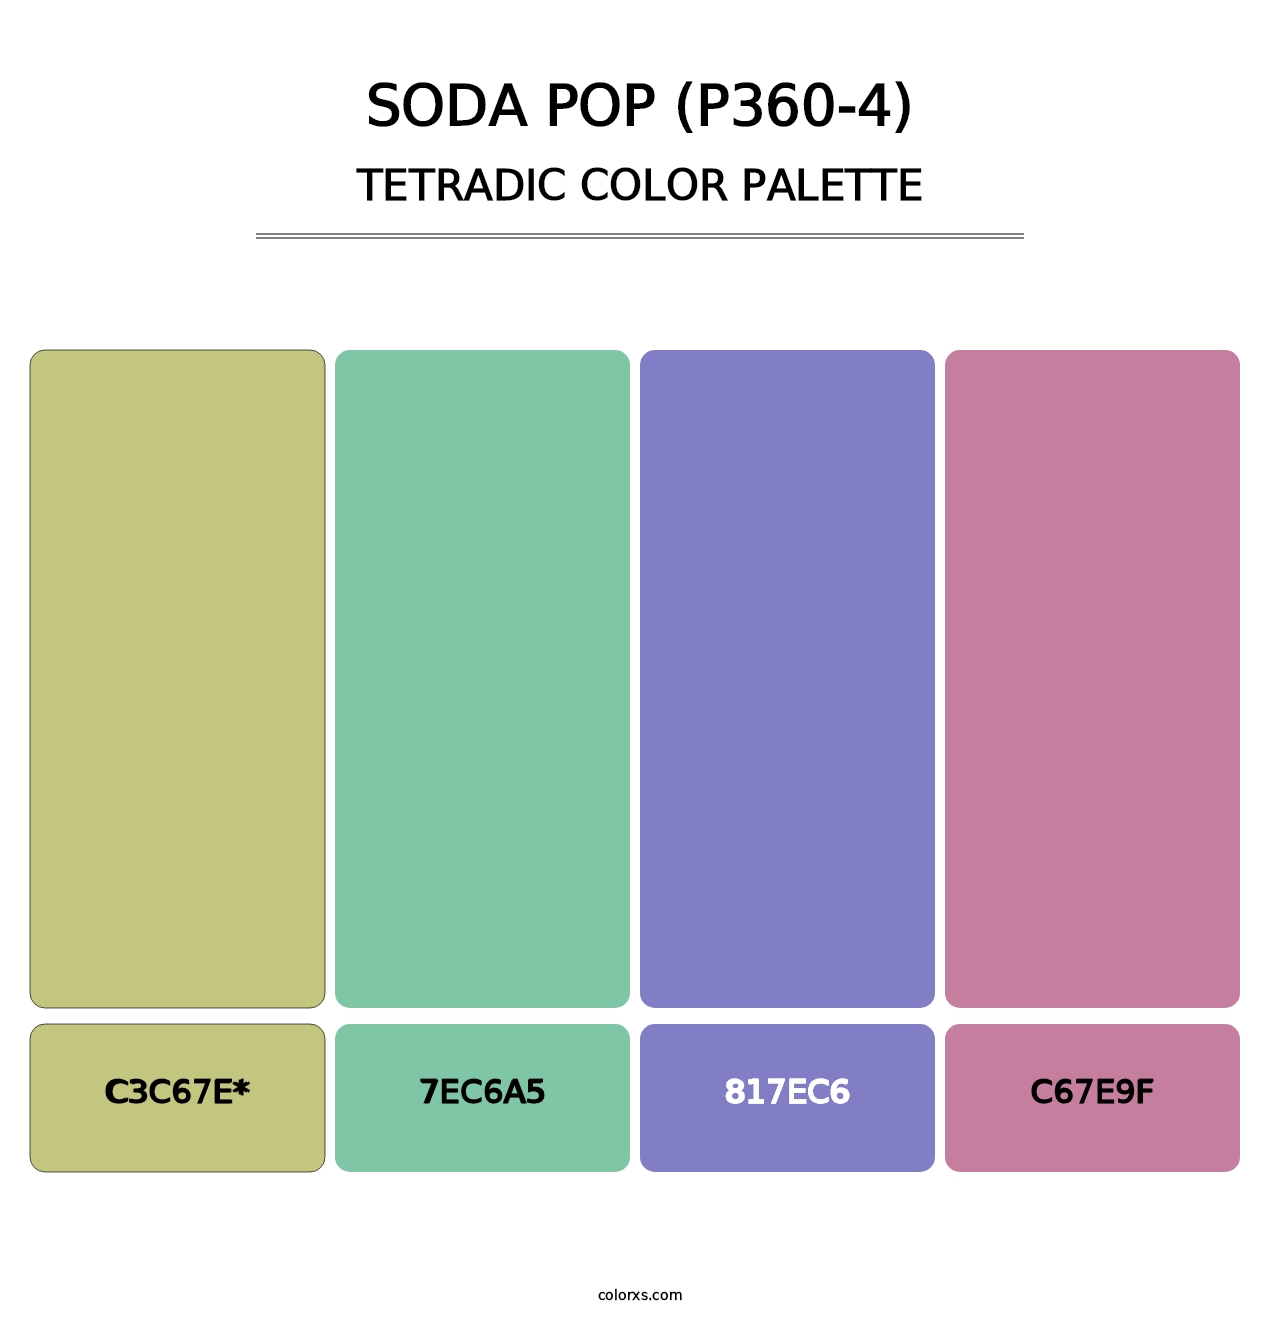 Soda Pop (P360-4) - Tetradic Color Palette